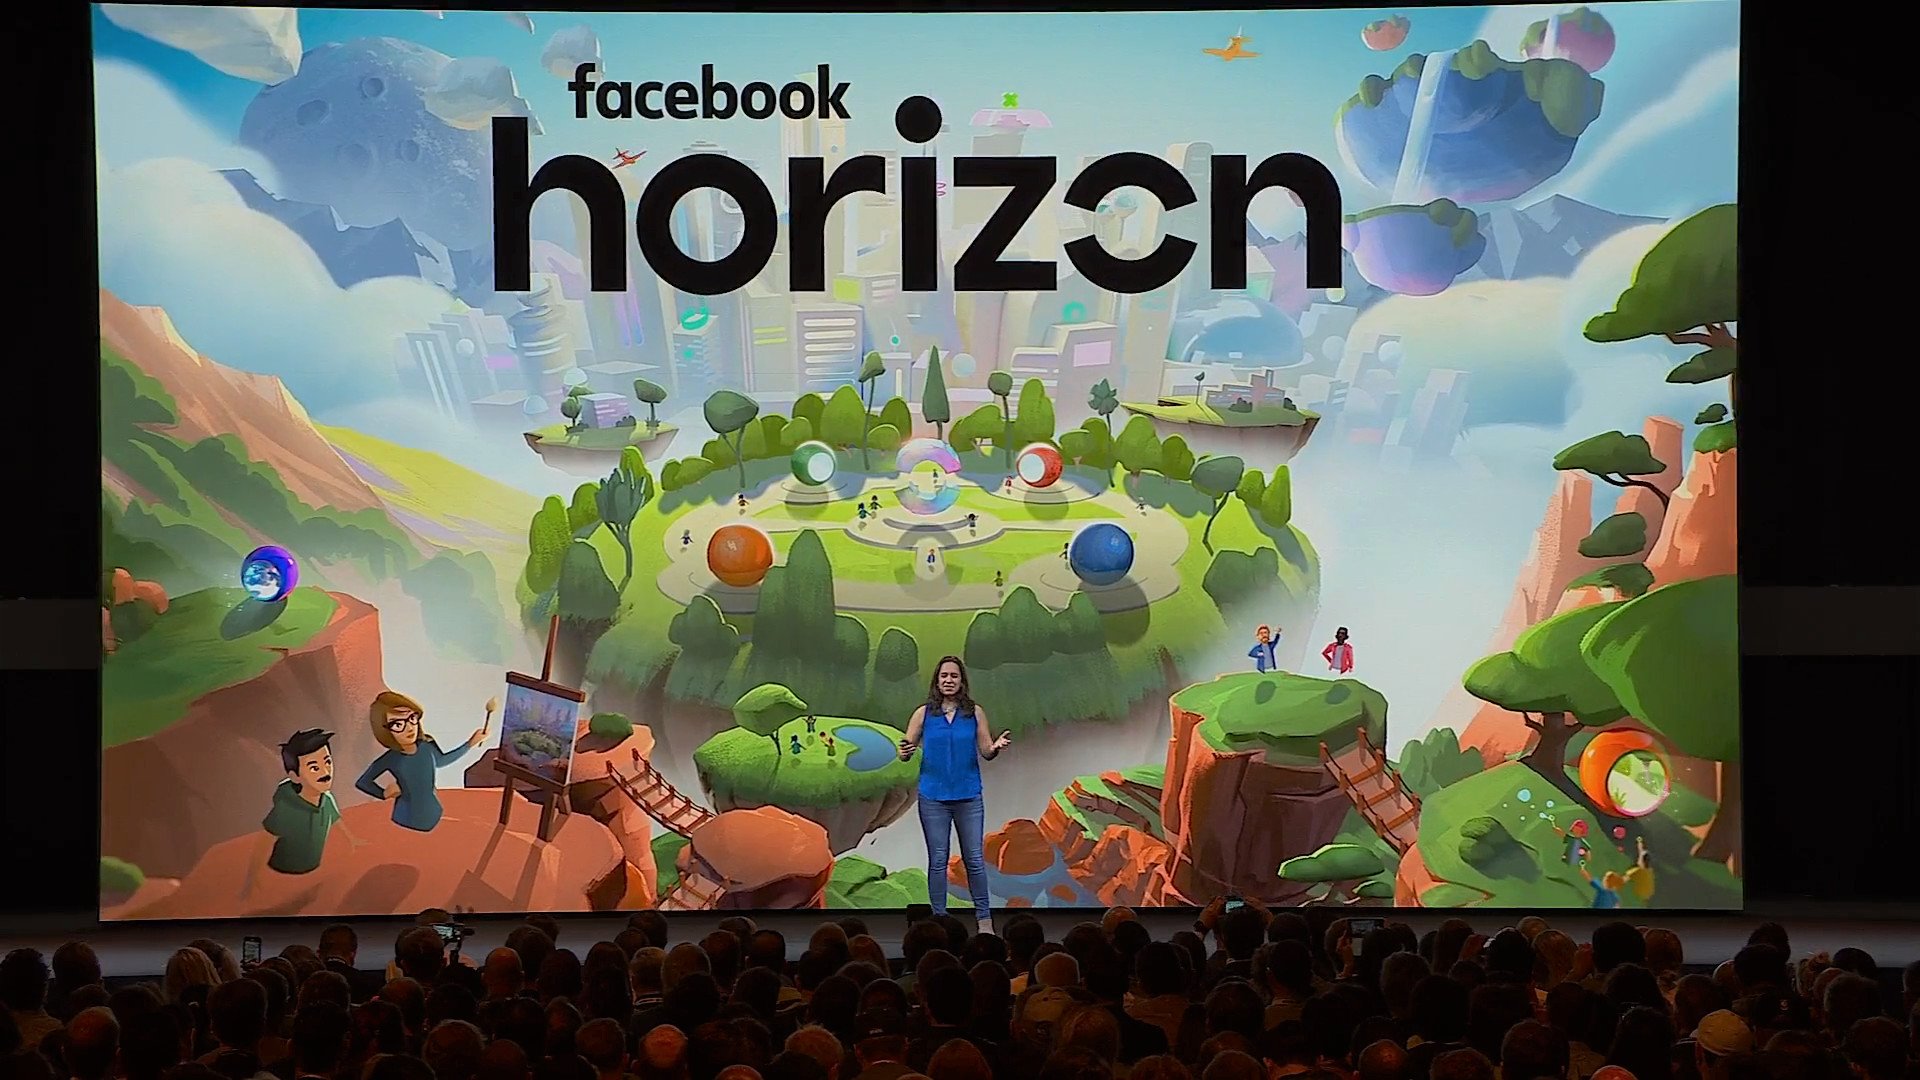 facebook-horizons-hero.jpg